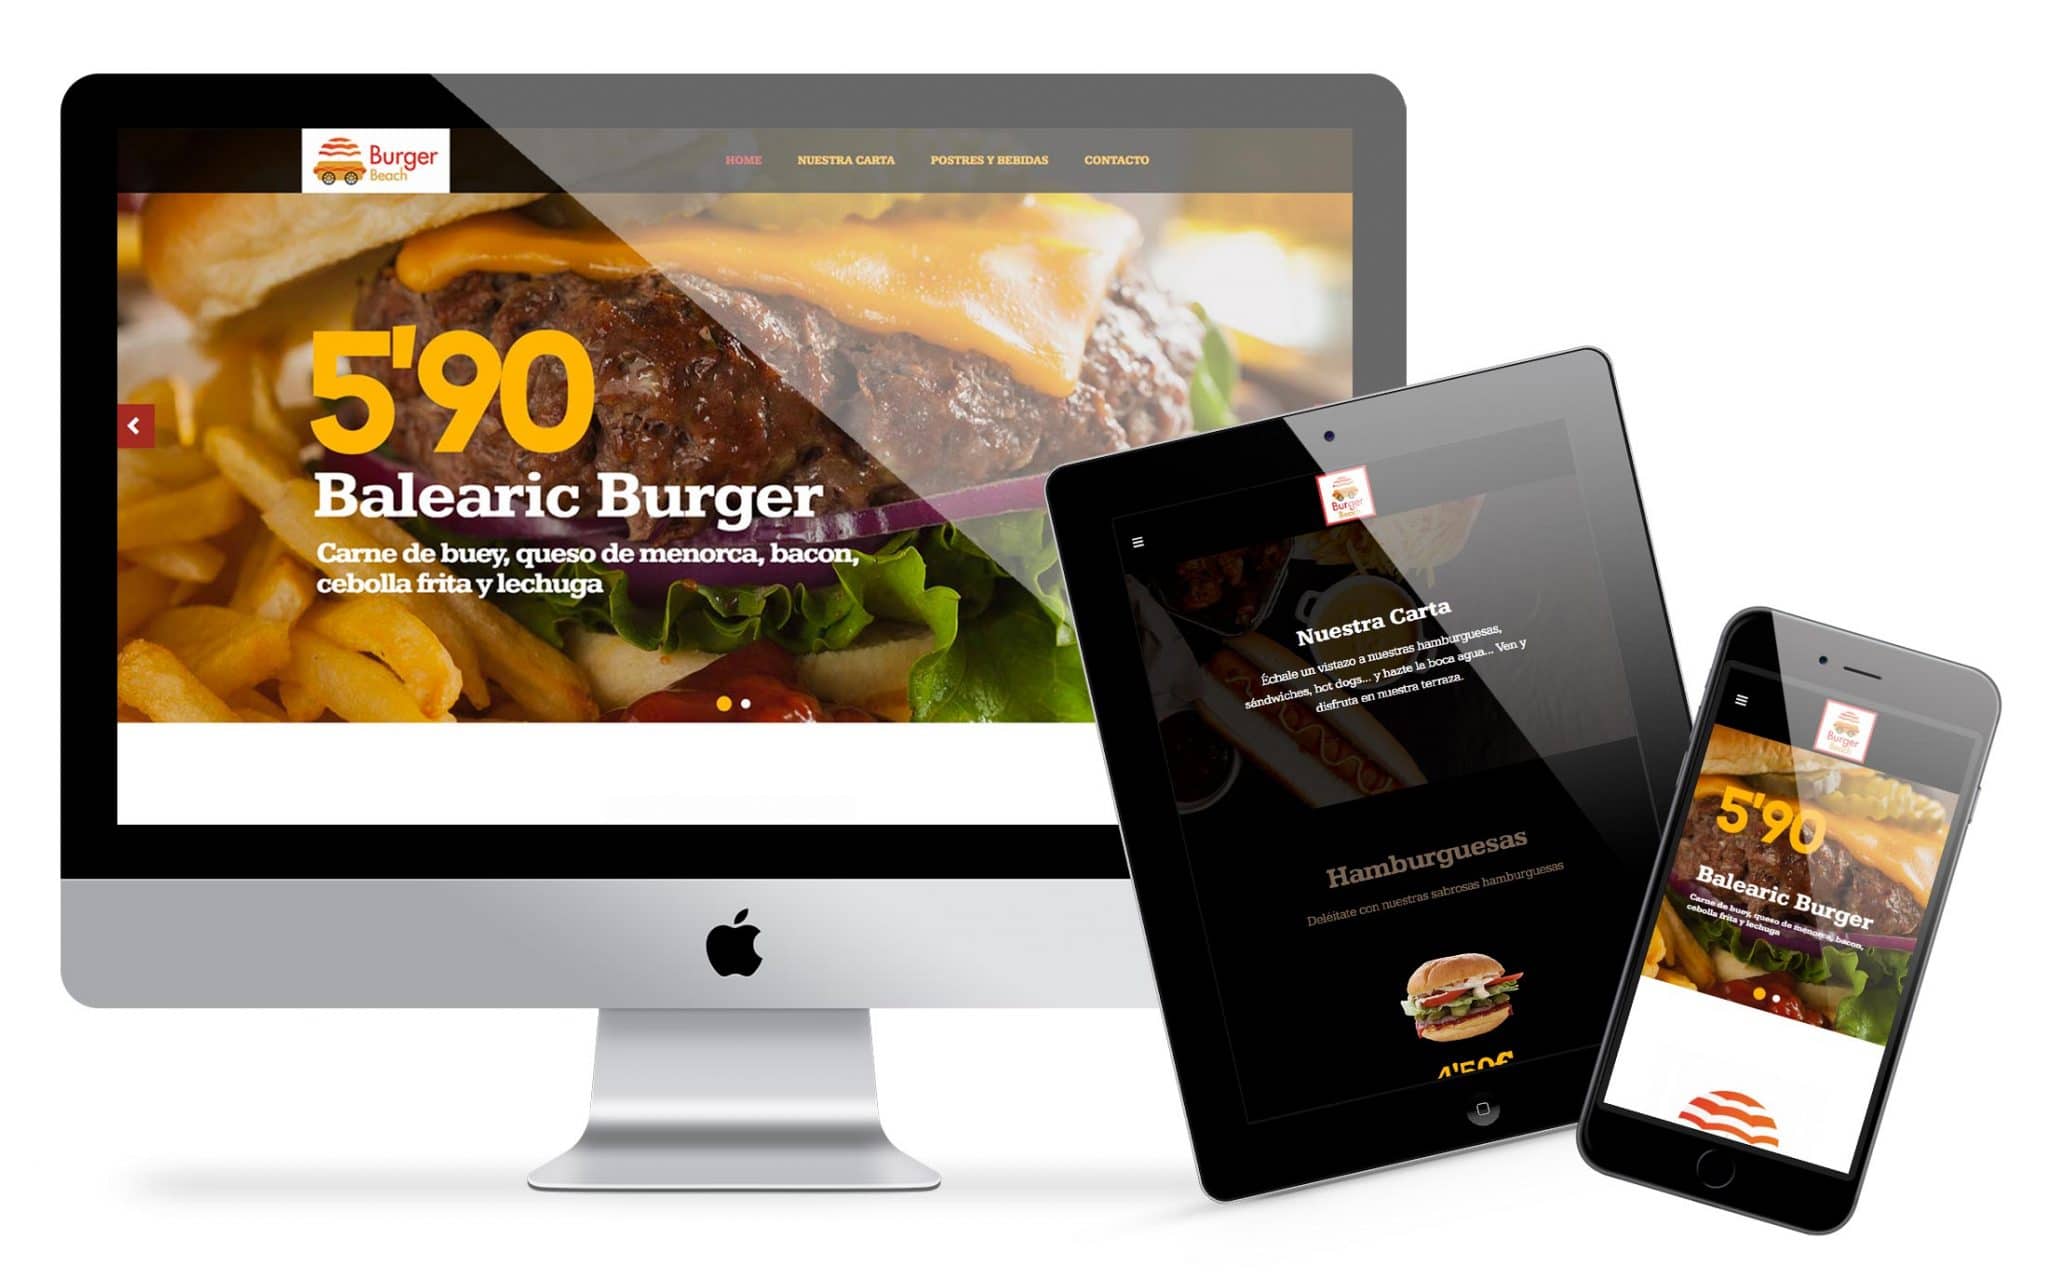 burgerbeach 001 scaled - inova3 - Marketing digital desde ourense